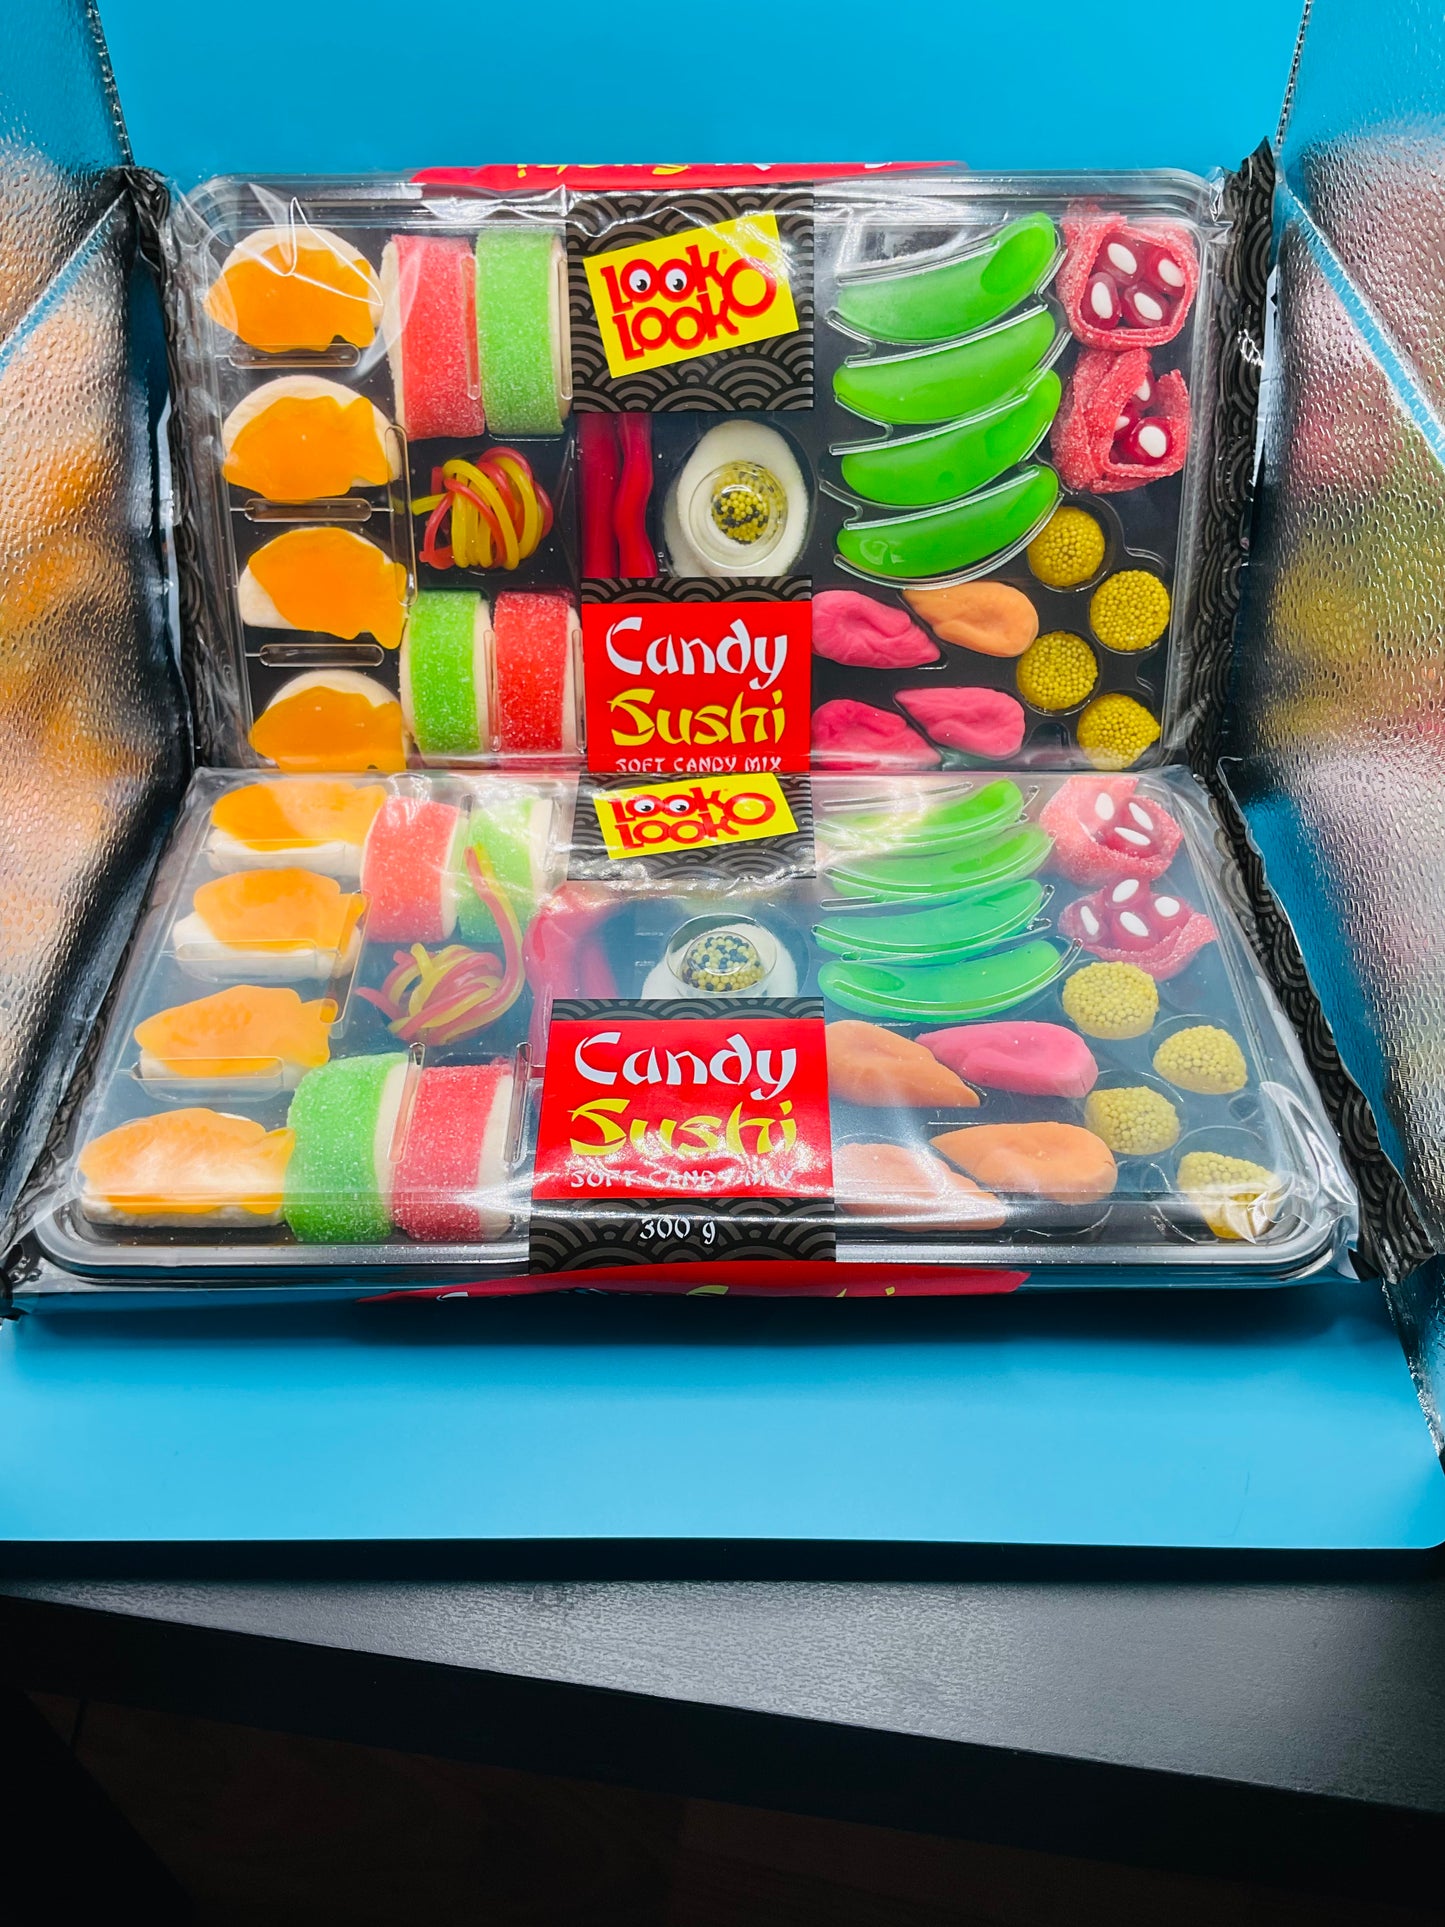 Look-O-Look Candy Sushi Tray